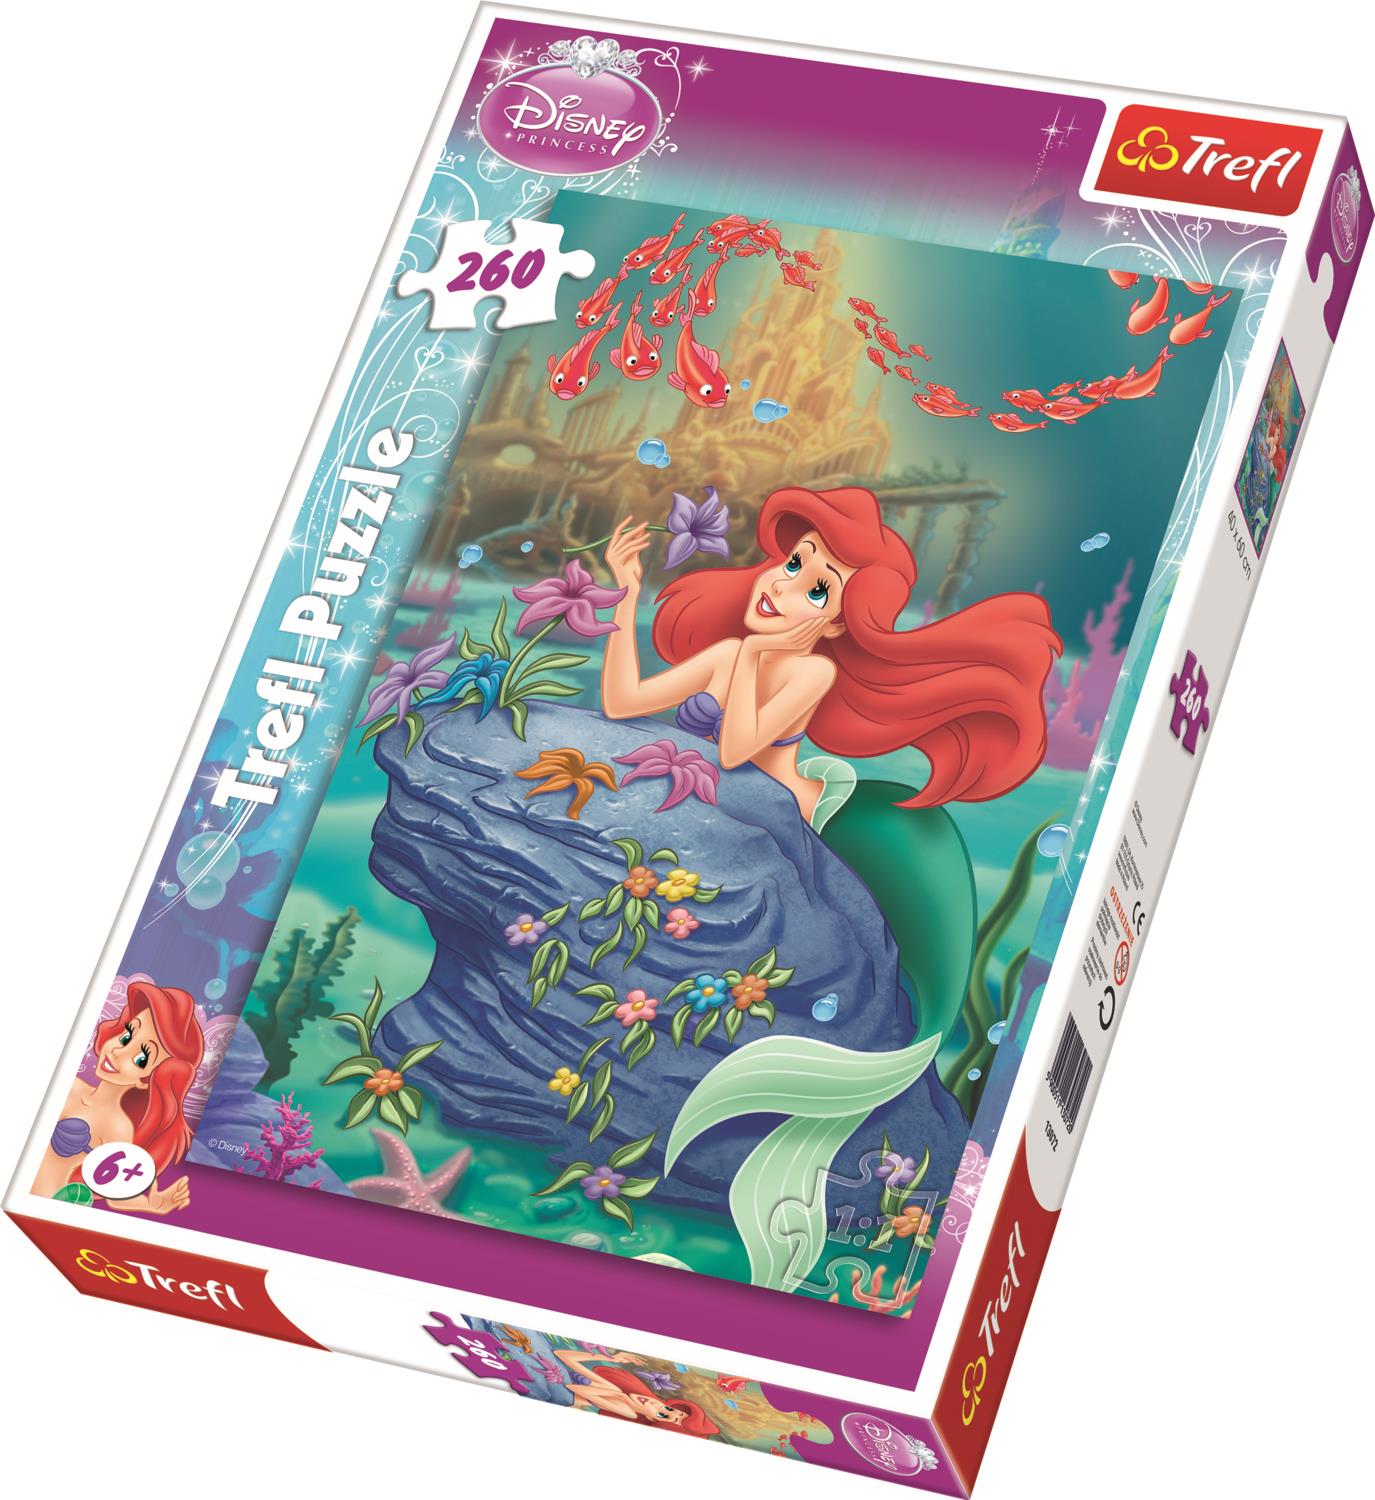 Trefl Çocuk Puzzle 13072 Princess The Little Mermaid, Disney 260 Parça Puzzle